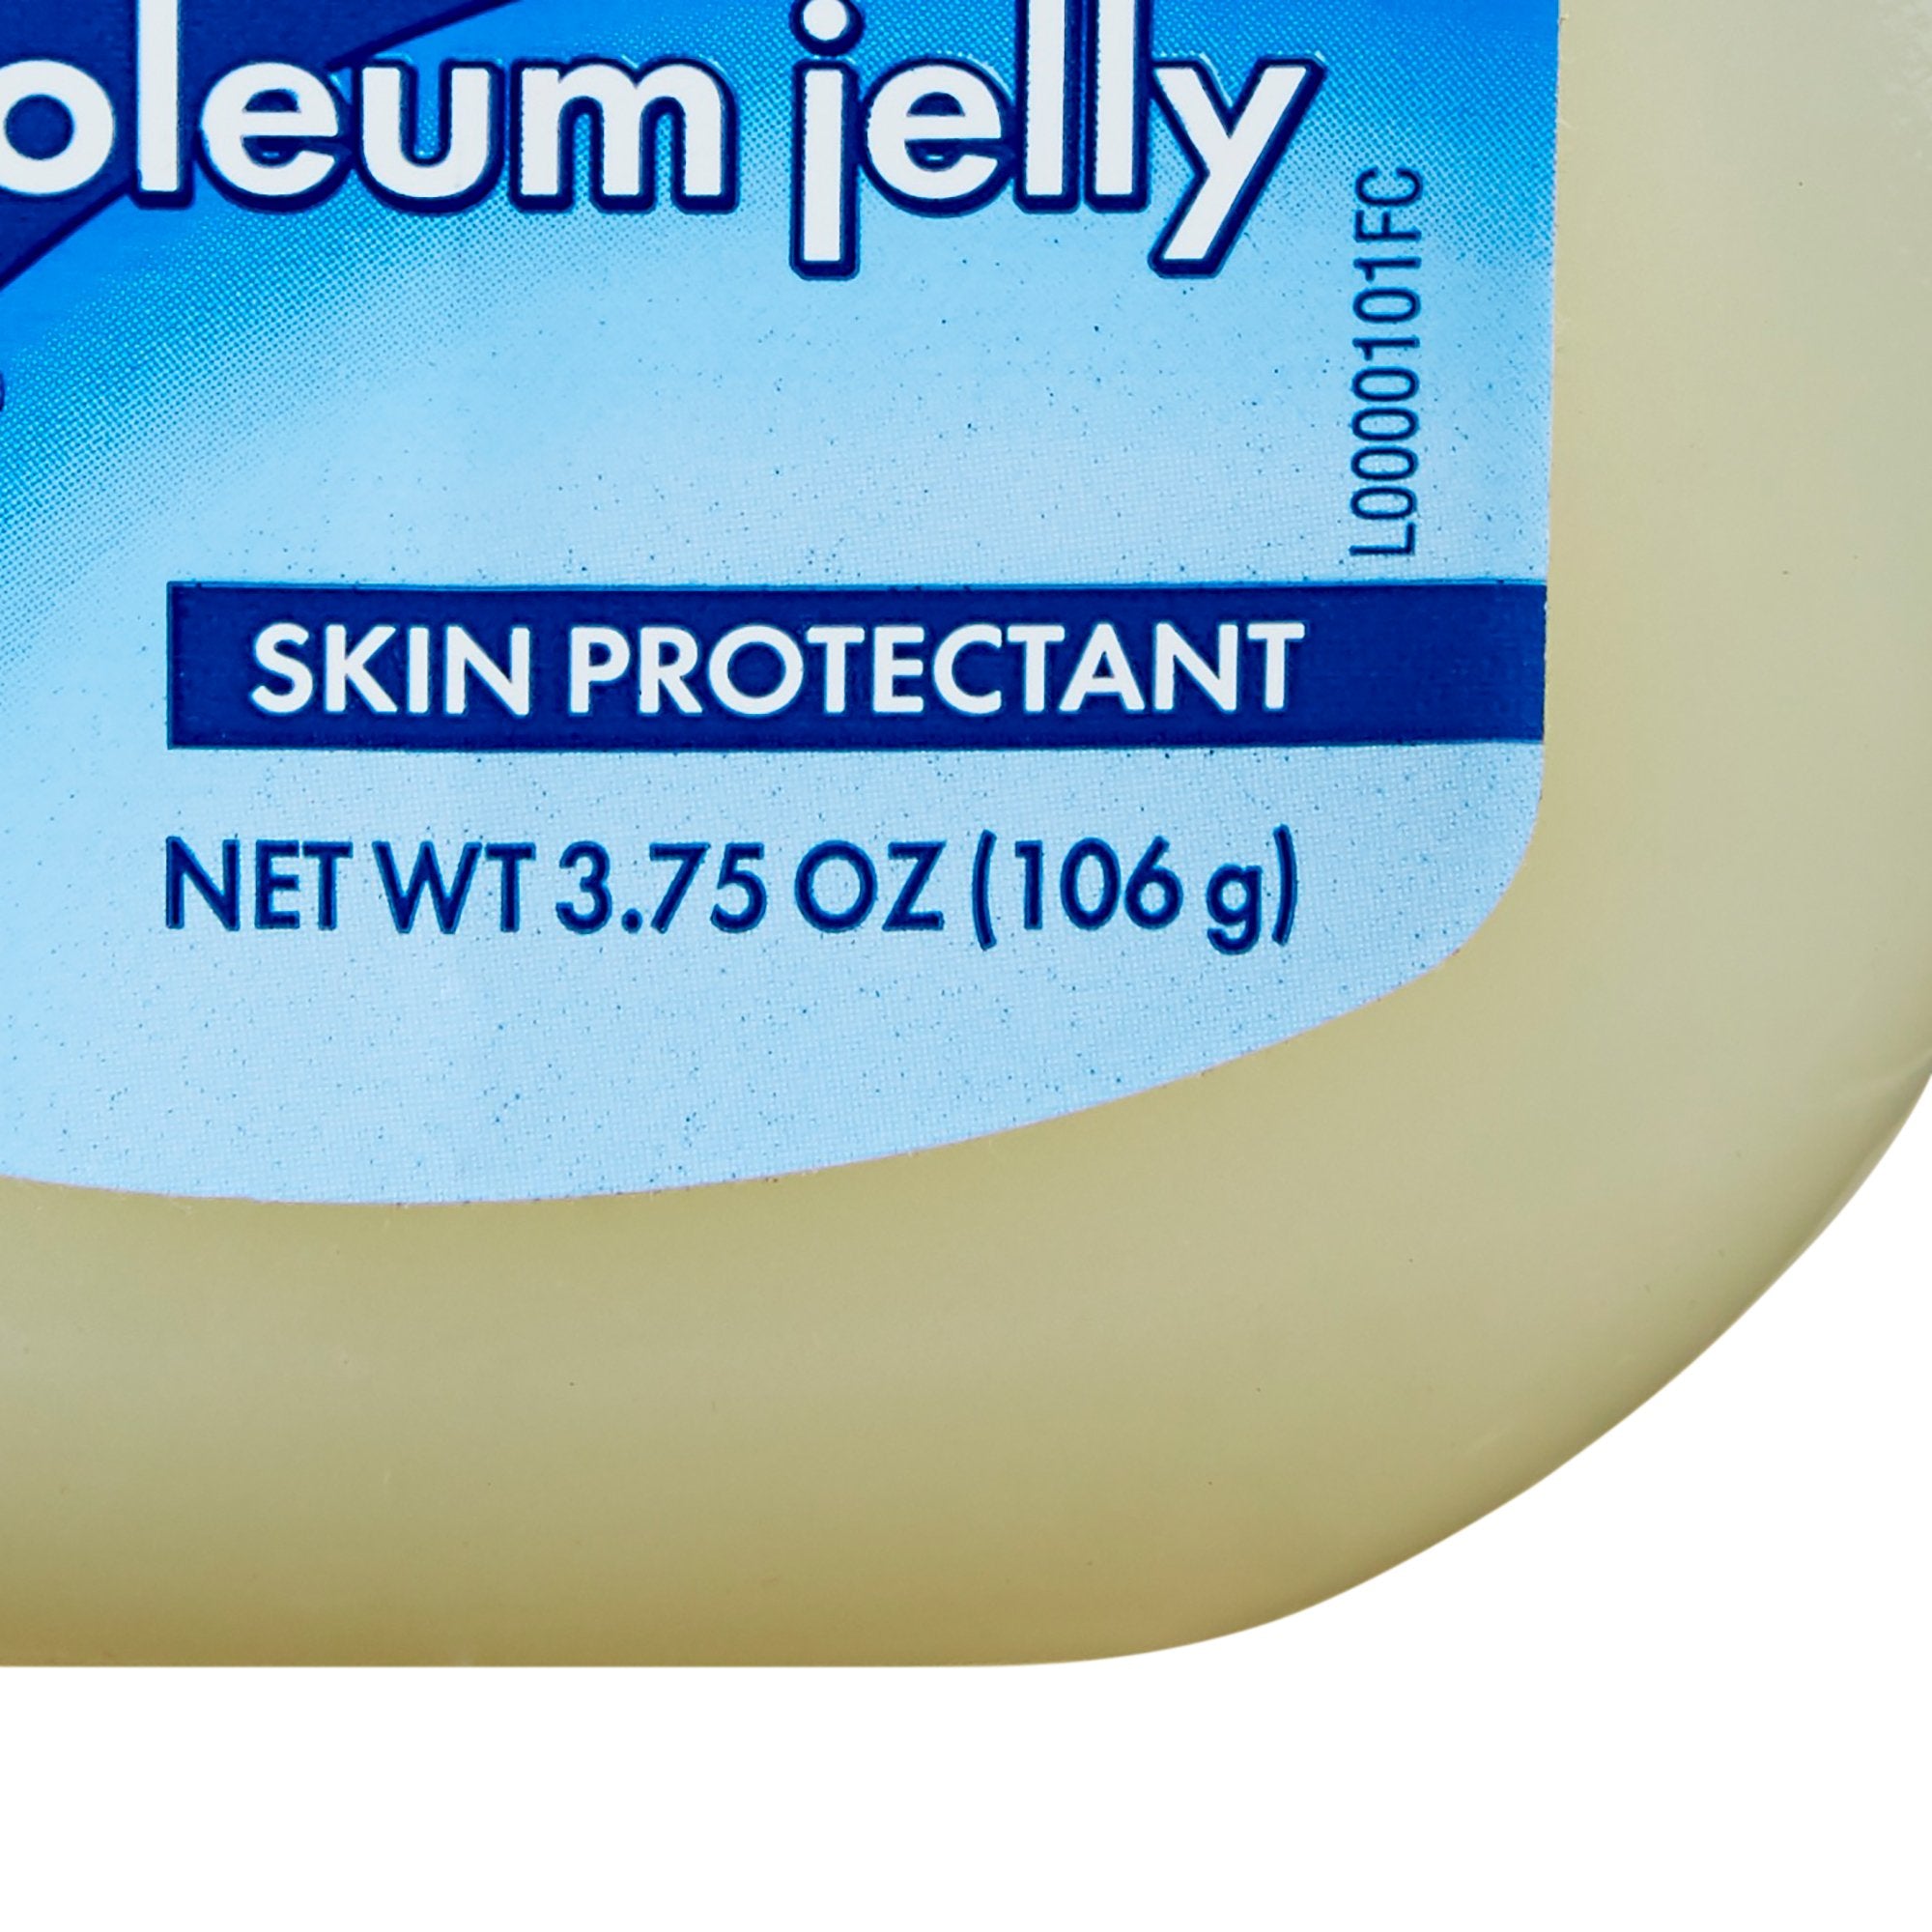 Petroleum Jelly sunmark® 3.75 oz. Jar NonSterile